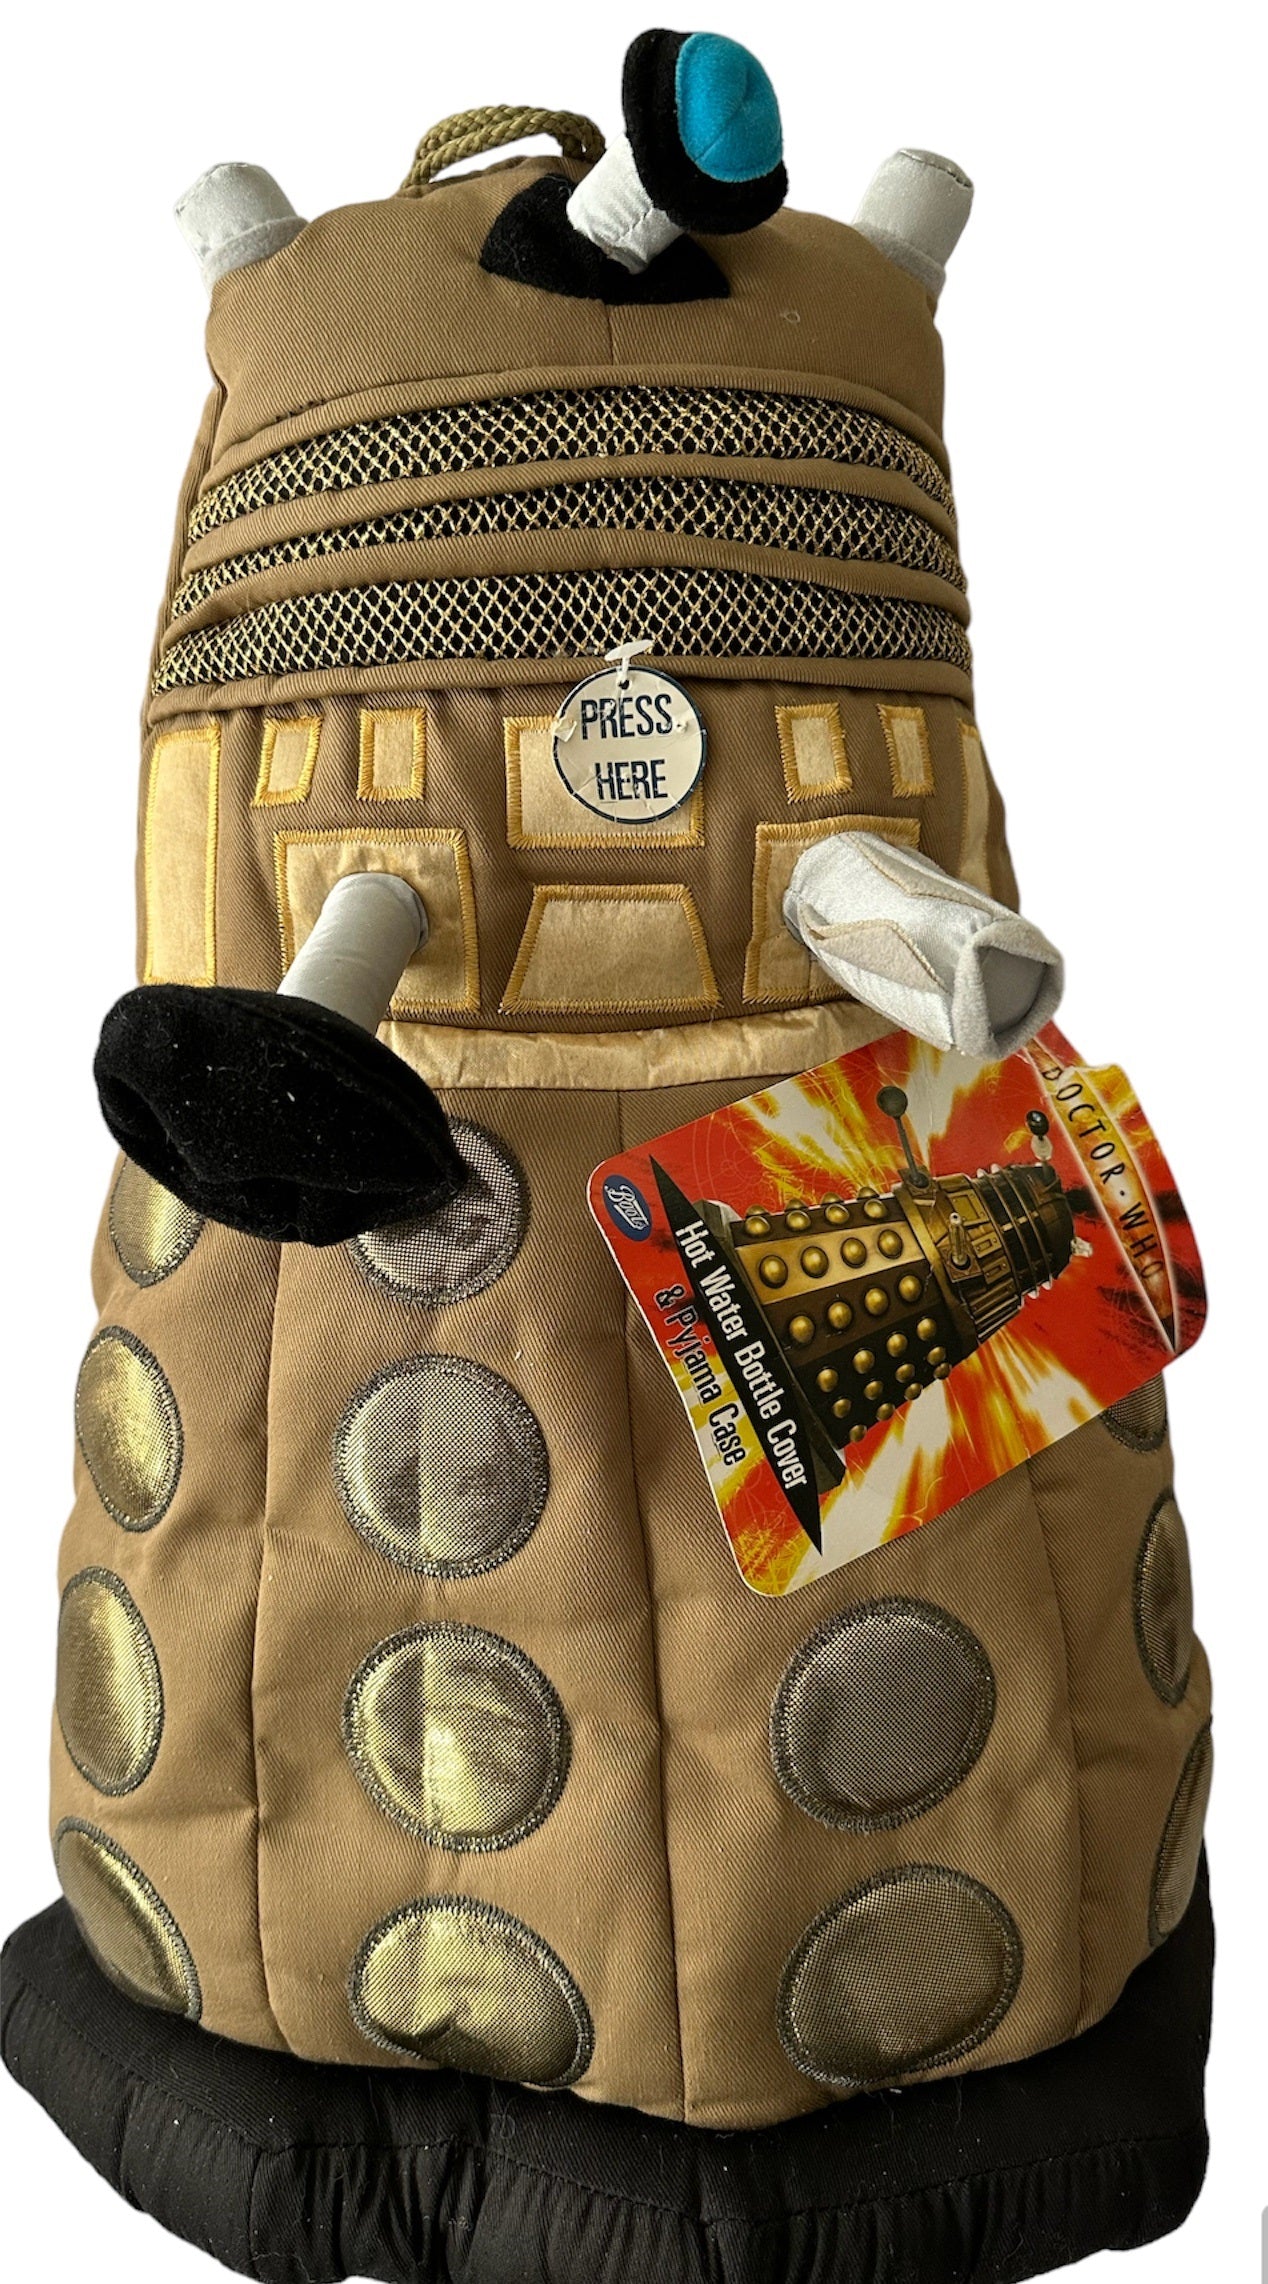 Vintage 2005 Doctor Who Talking Dalek Hot Water Bottle Cover And Pyjama Case - Brand New Factory Sealed Shop Stock Room Find